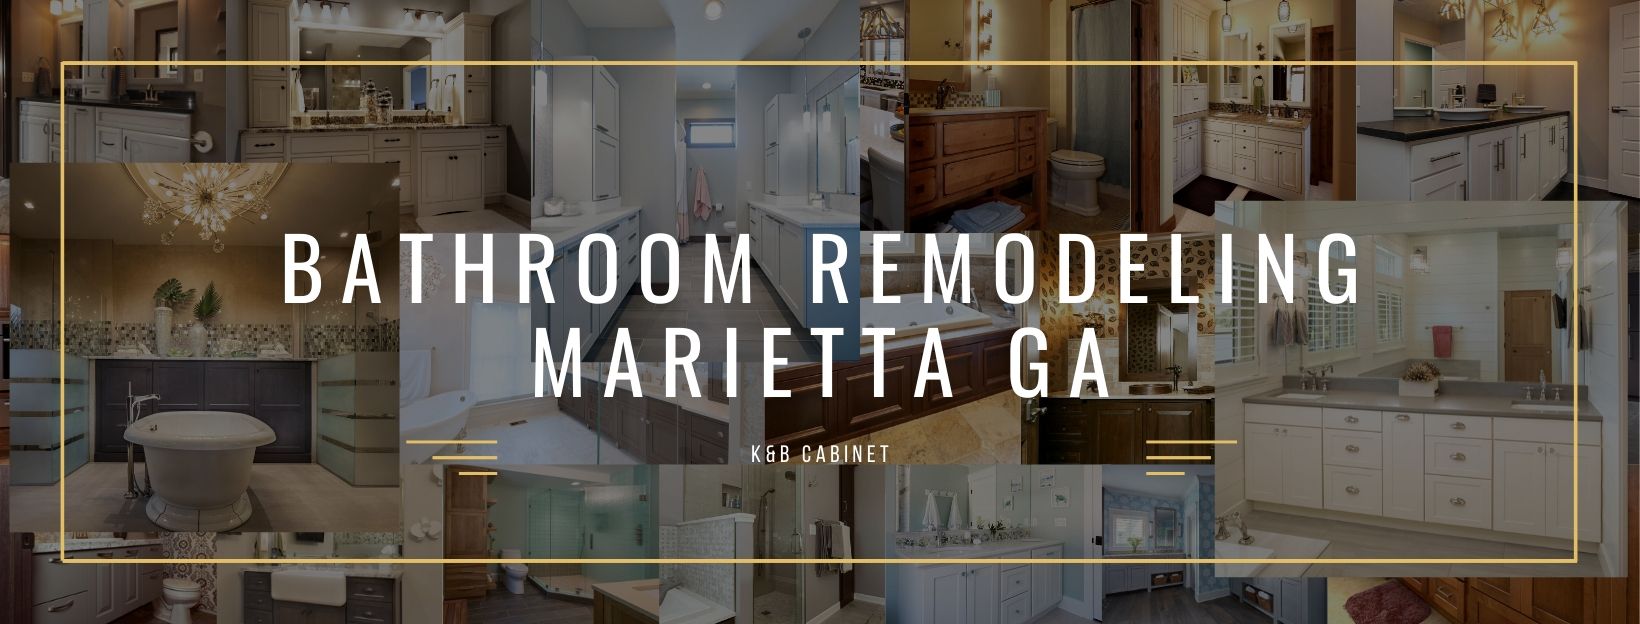 Bathroom Remodeling Marietta GA